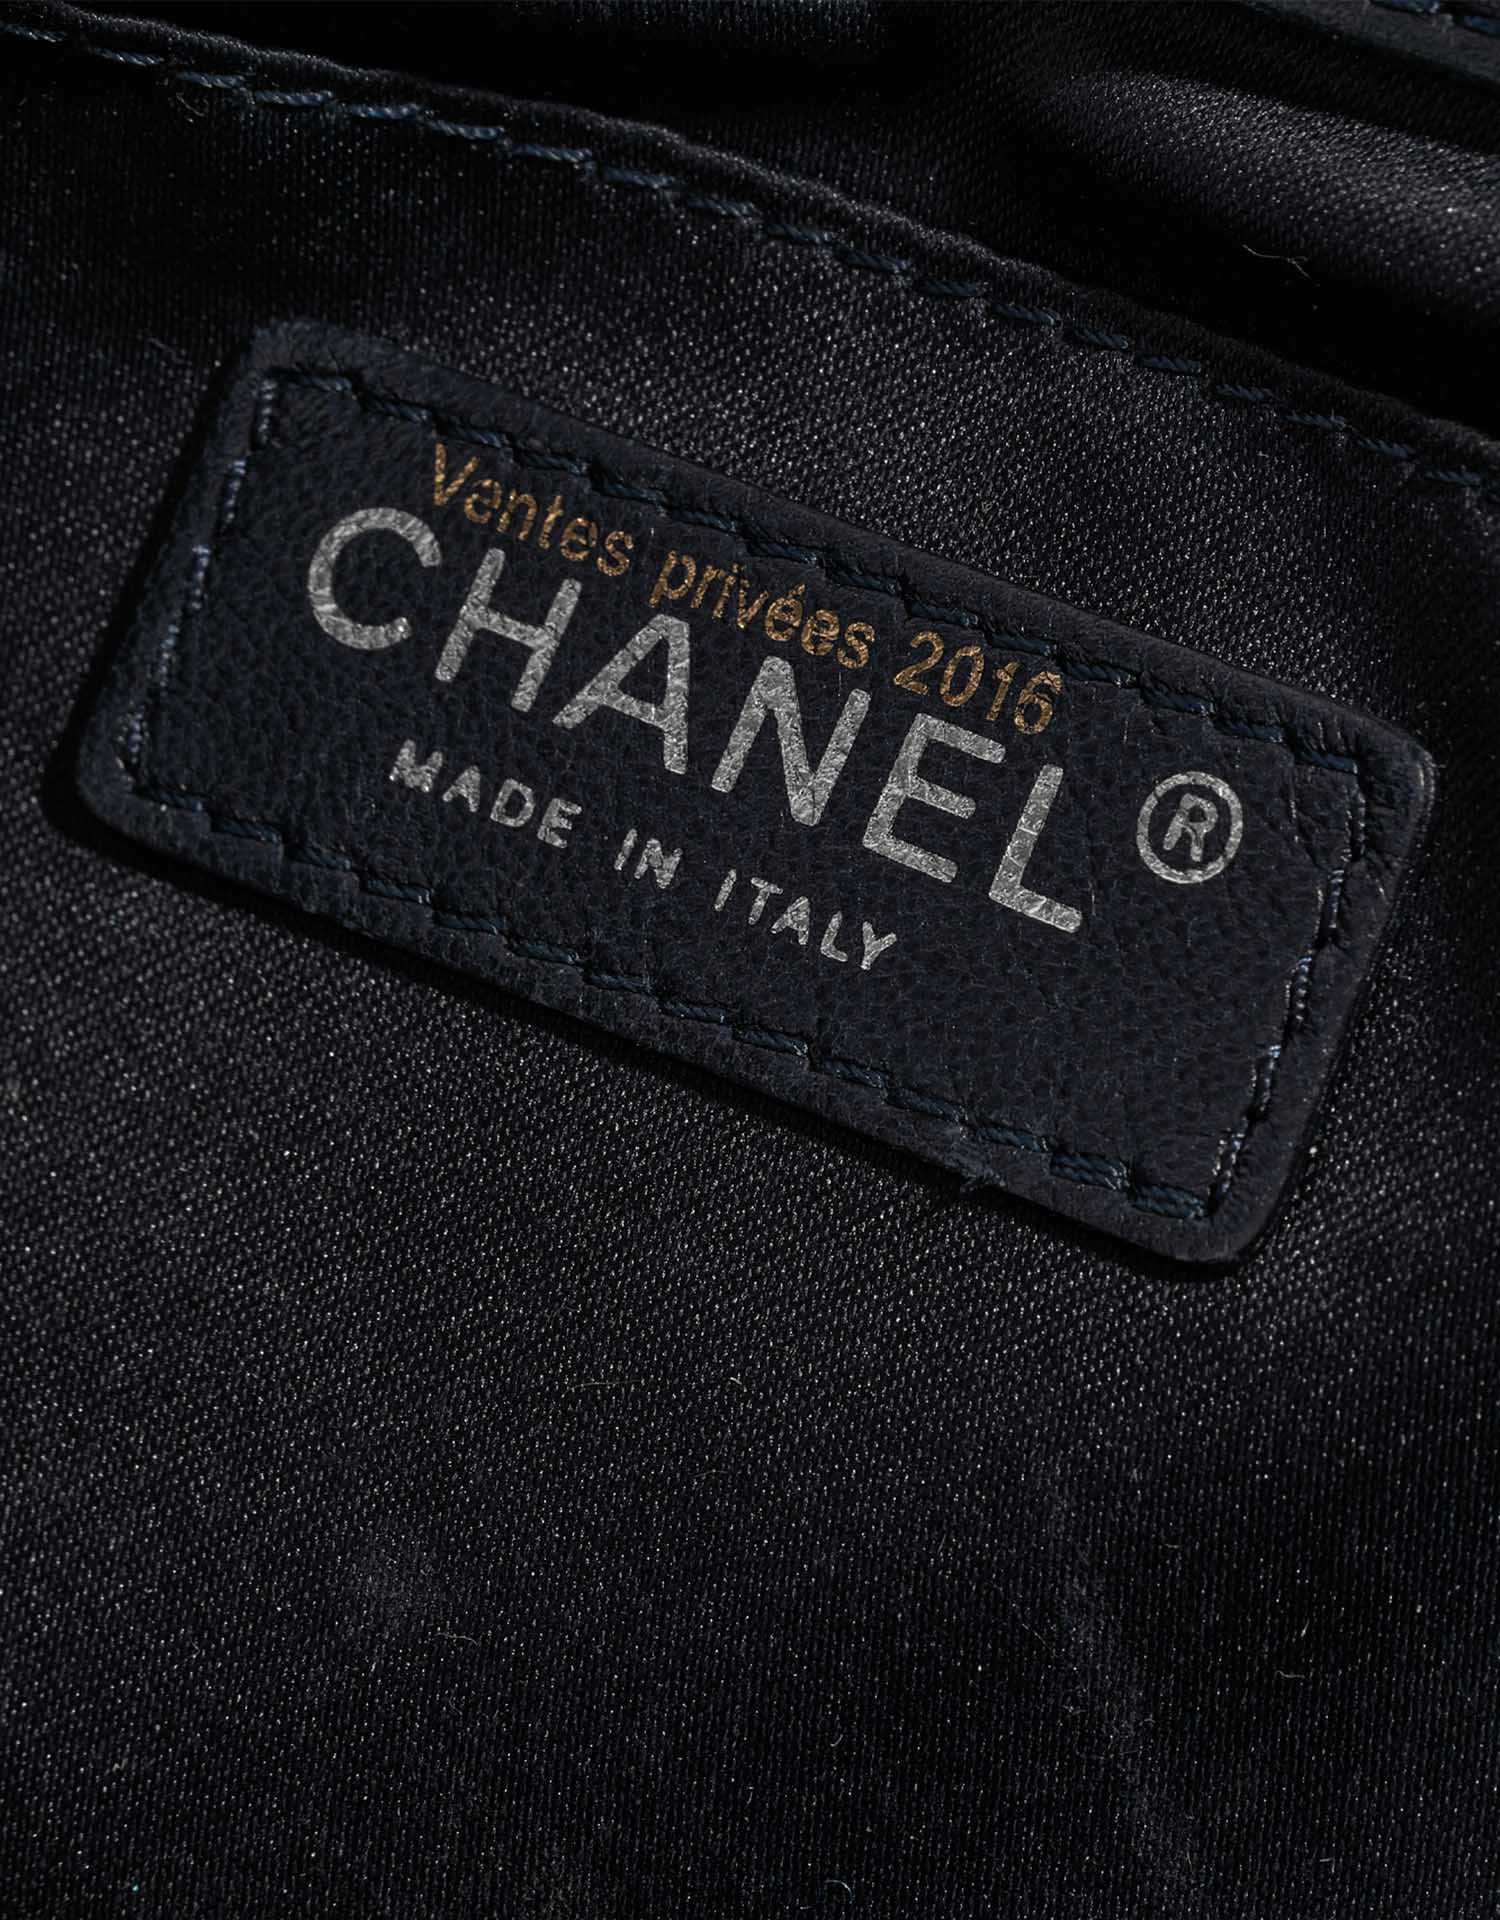 Chanel Timeless Jumbo DarkBlue Logo  | Sell your designer bag on Saclab.com